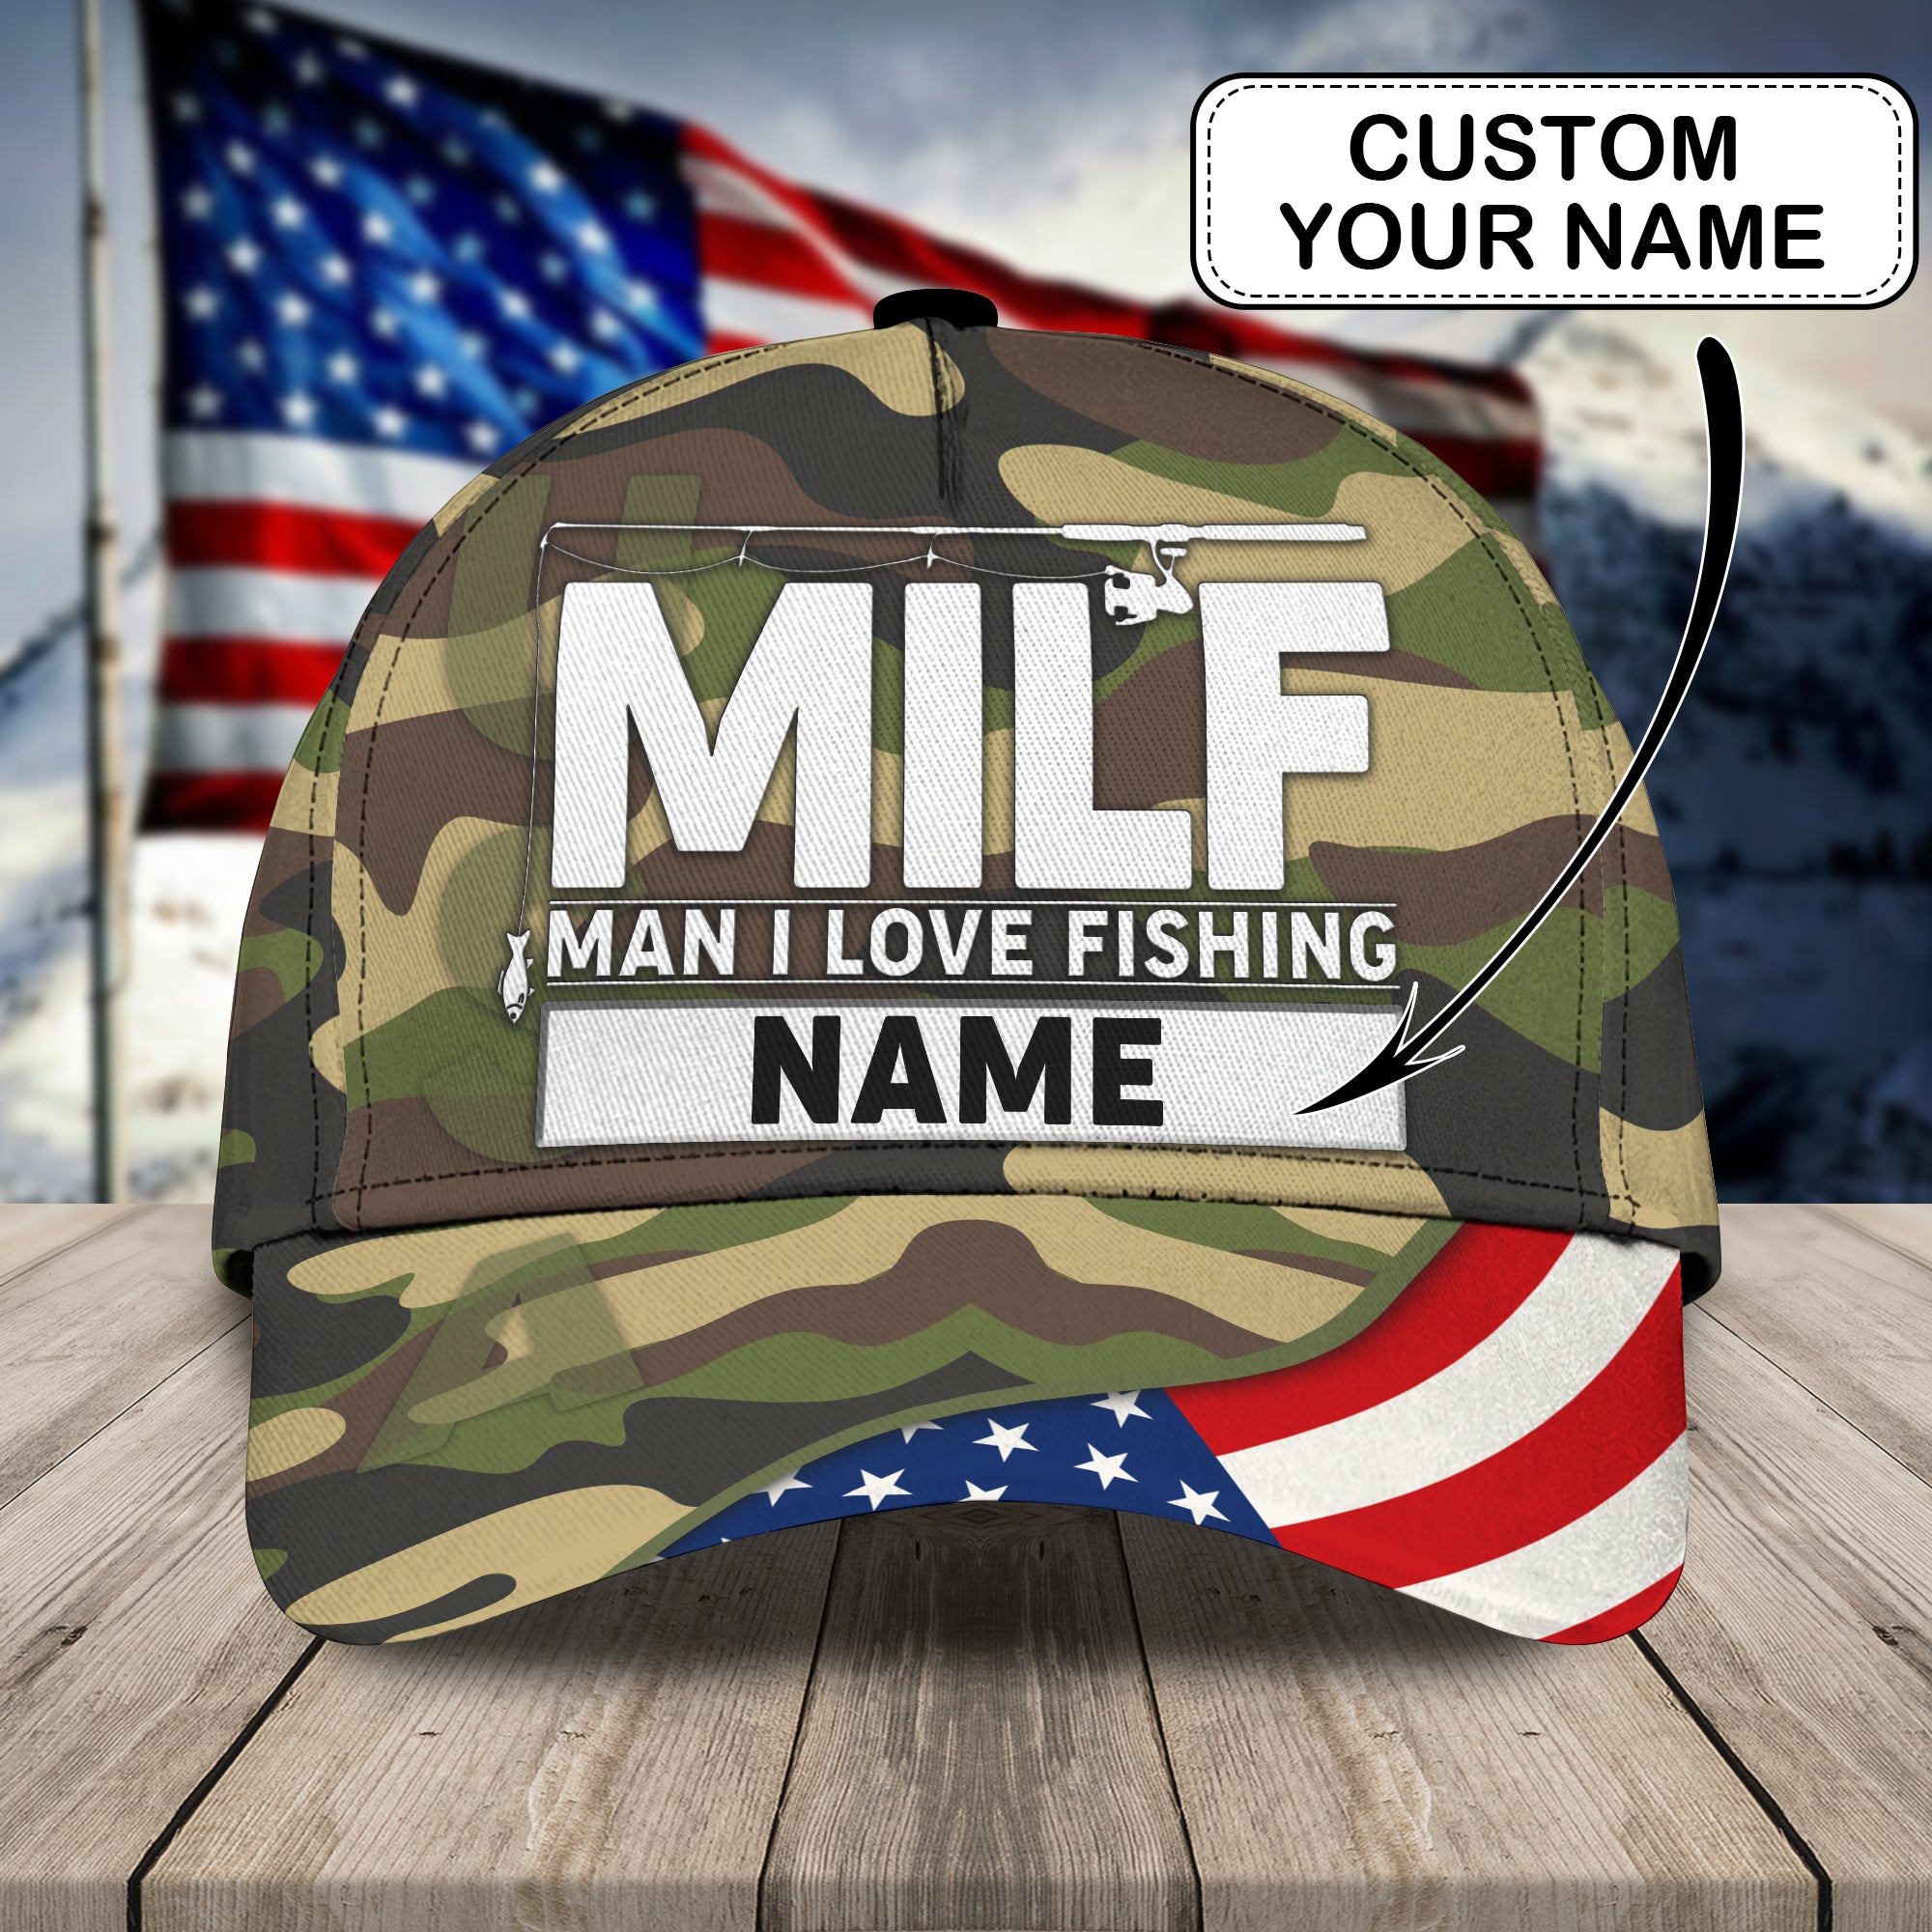 Customize Name Cap - Man I Love Fishing- Loop-H9h3-296